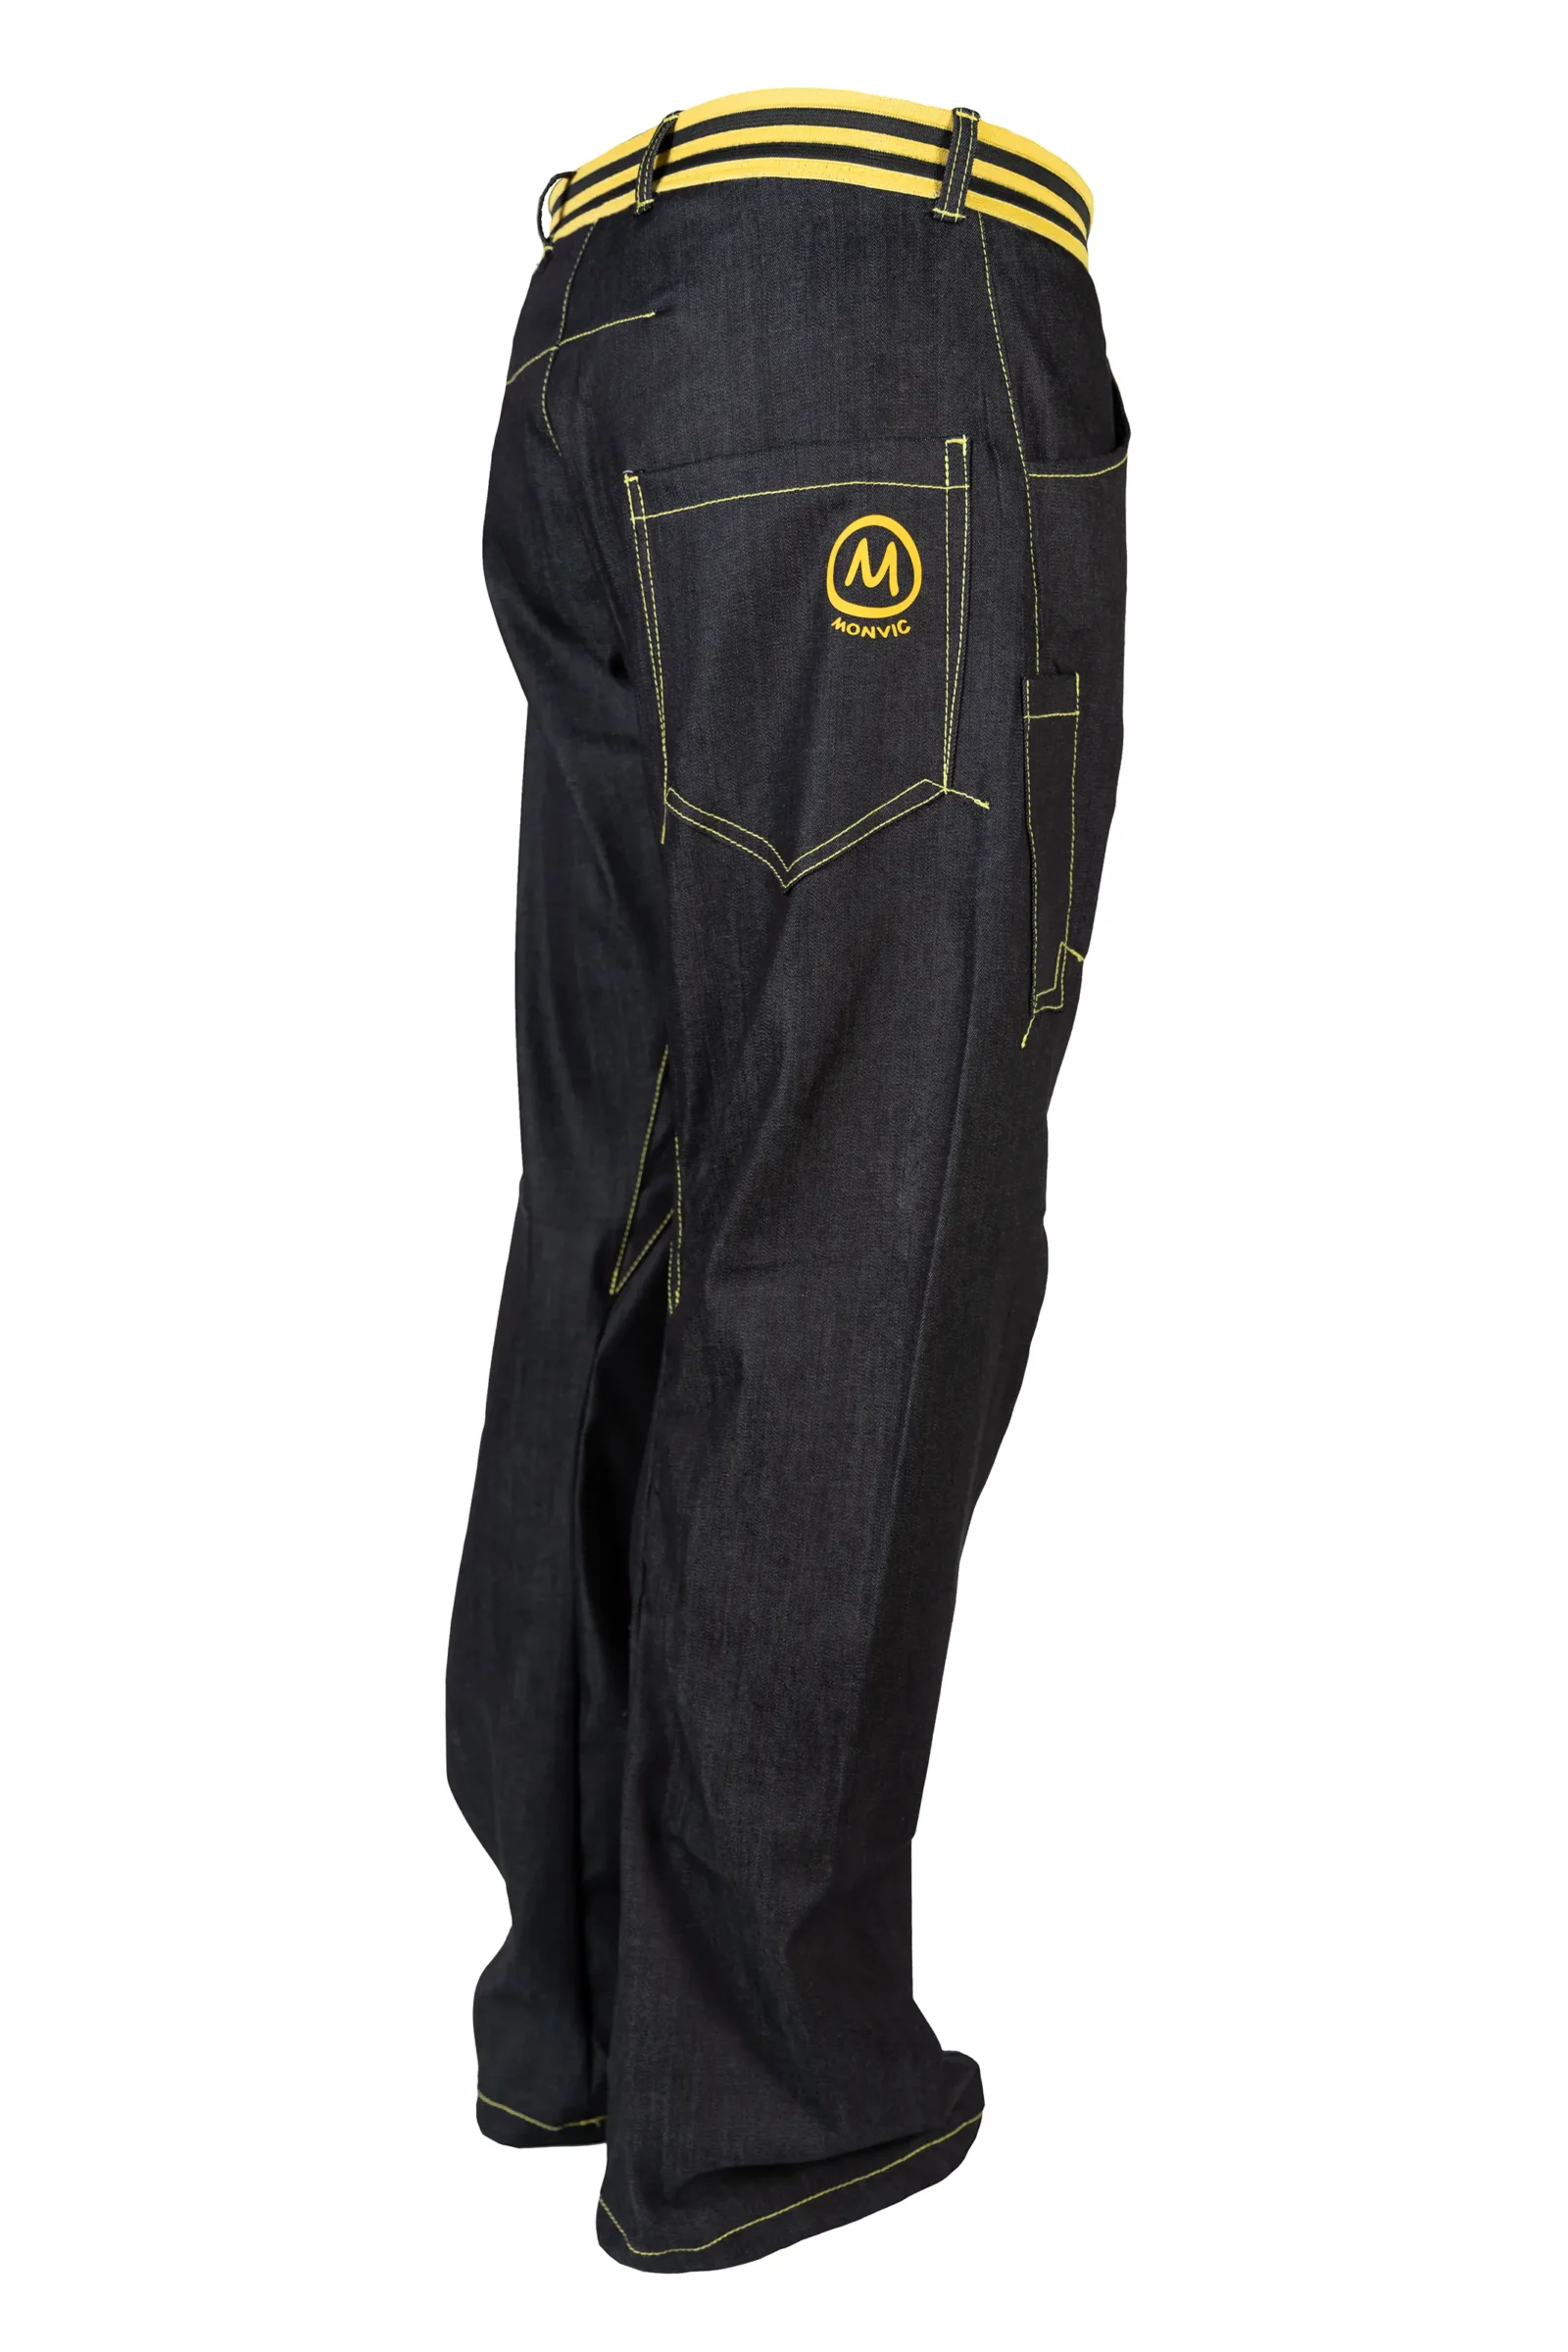 Unisex denim climbing jeans with elastic waist - yellow stitching - GEO STRIPES Monvic